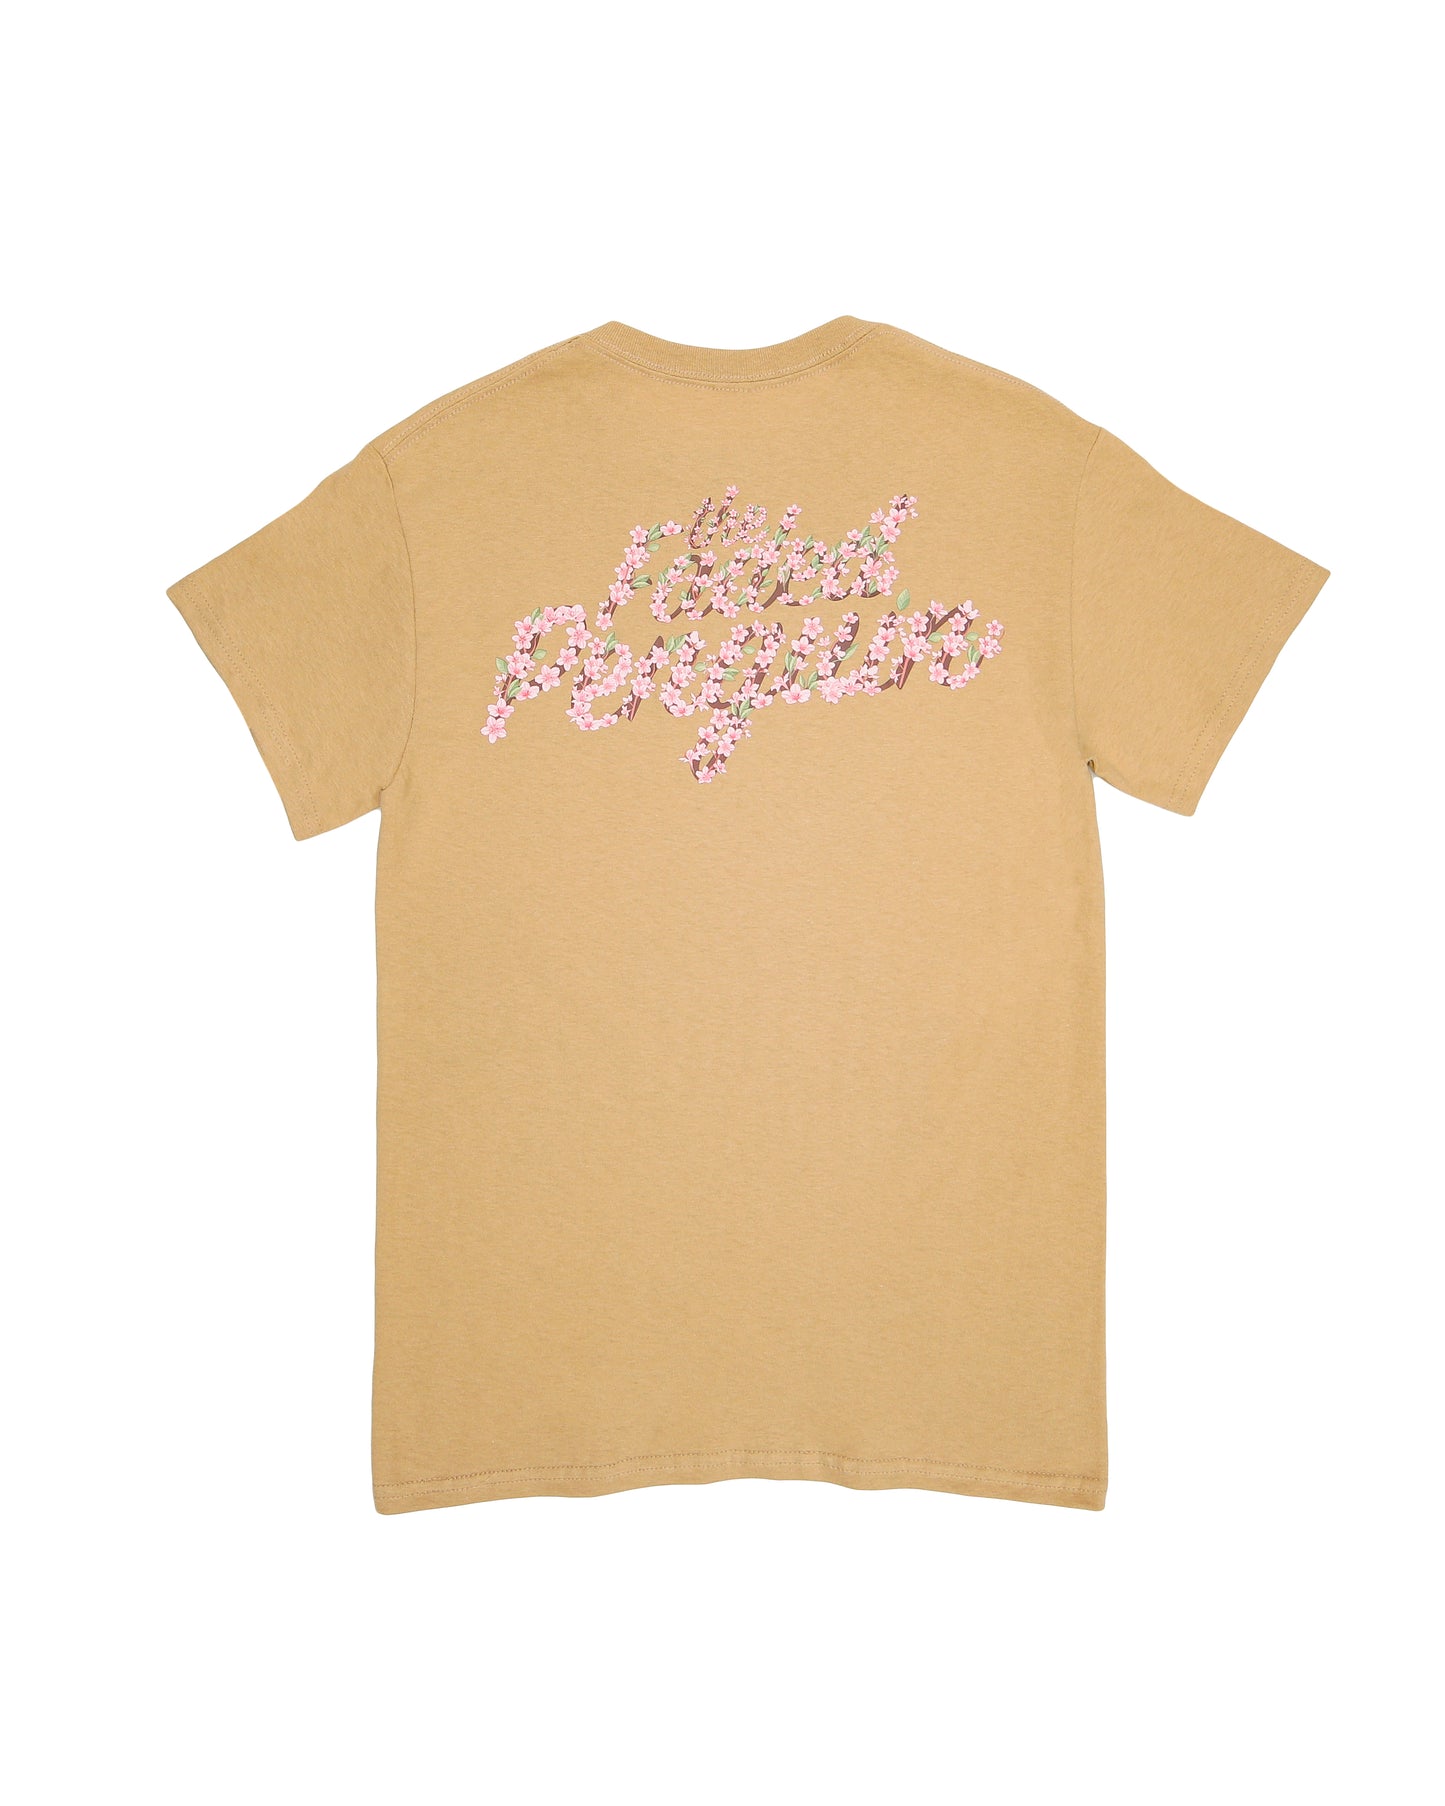 Cherry Blossom T-Shirt (Tan)